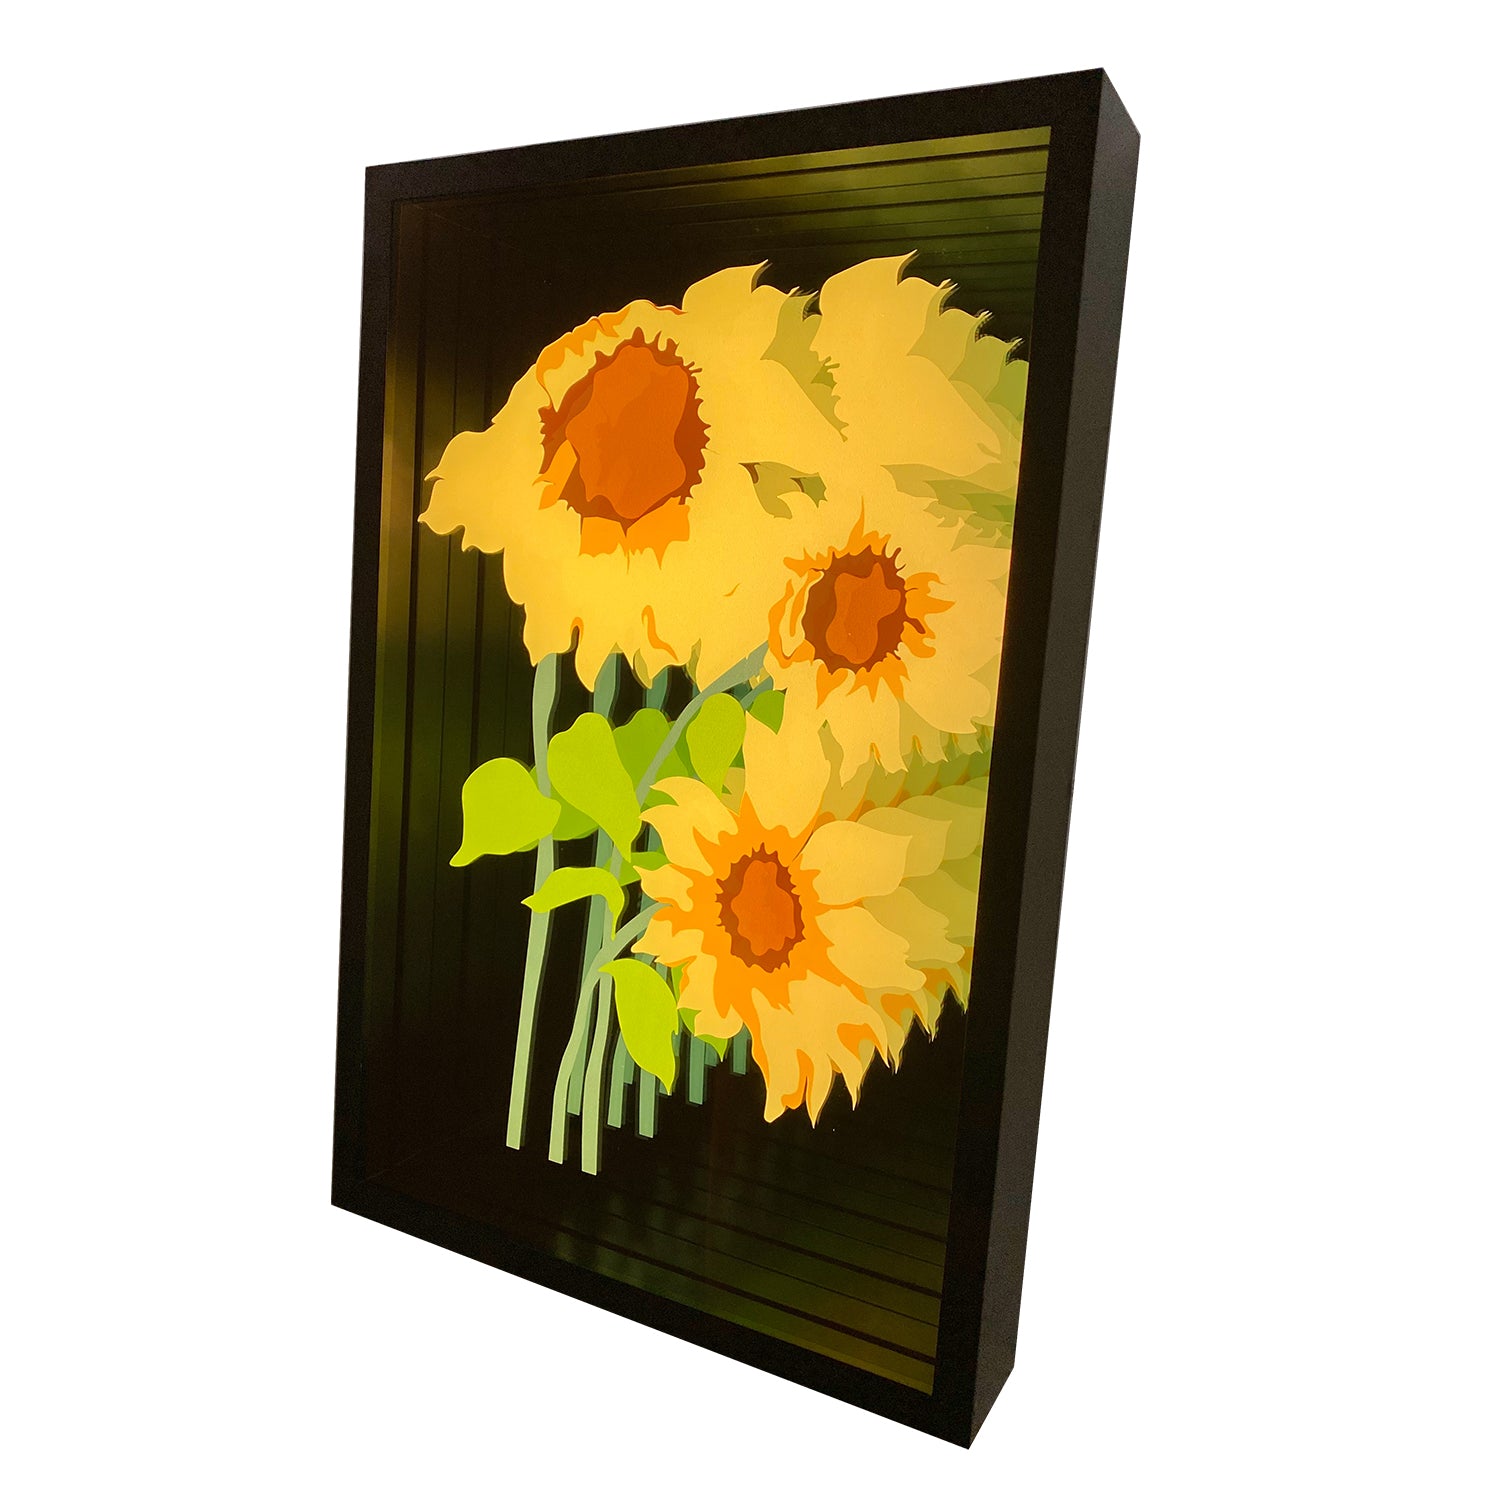 Sunflower led infinity mirror Best Gift for Birthday Wedding